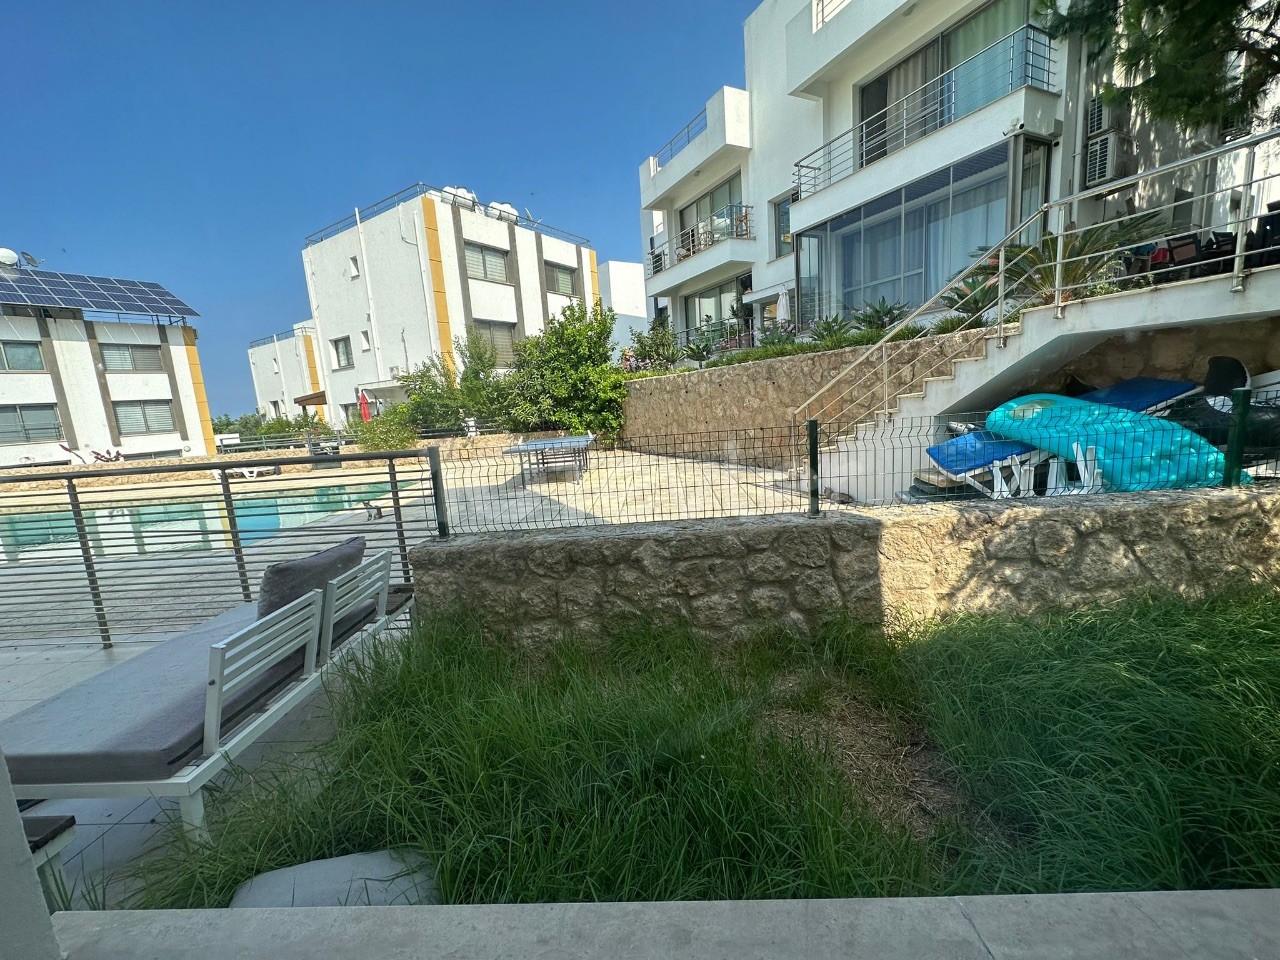 Kyrenia ciklos 4+1 villa with shared pool for rent